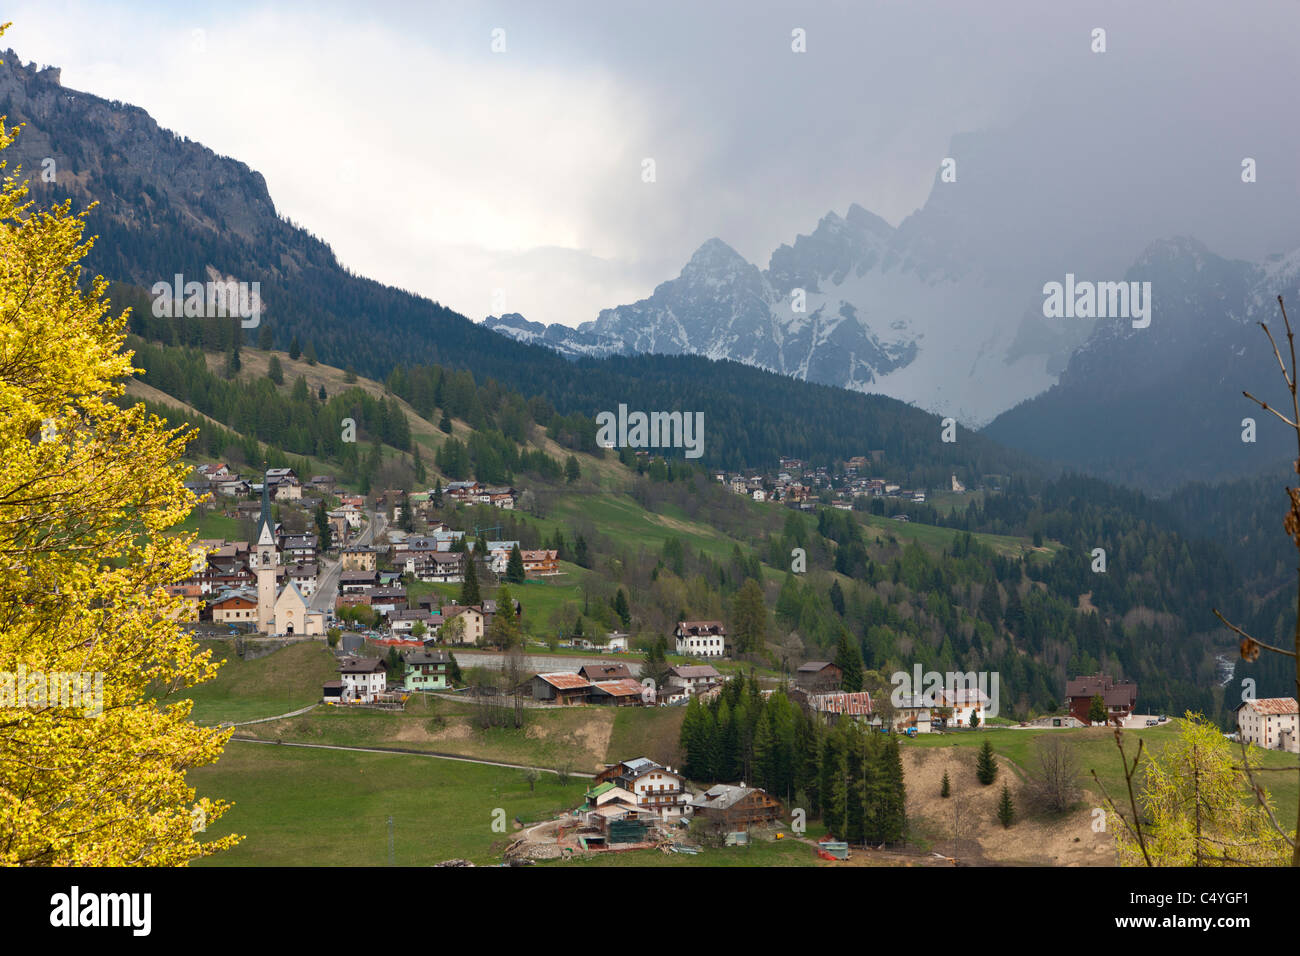 Selva di Cadore et Val Fiorentina vers M. Mondeval, Vento, Dolomites, Italie, Europy Banque D'Images